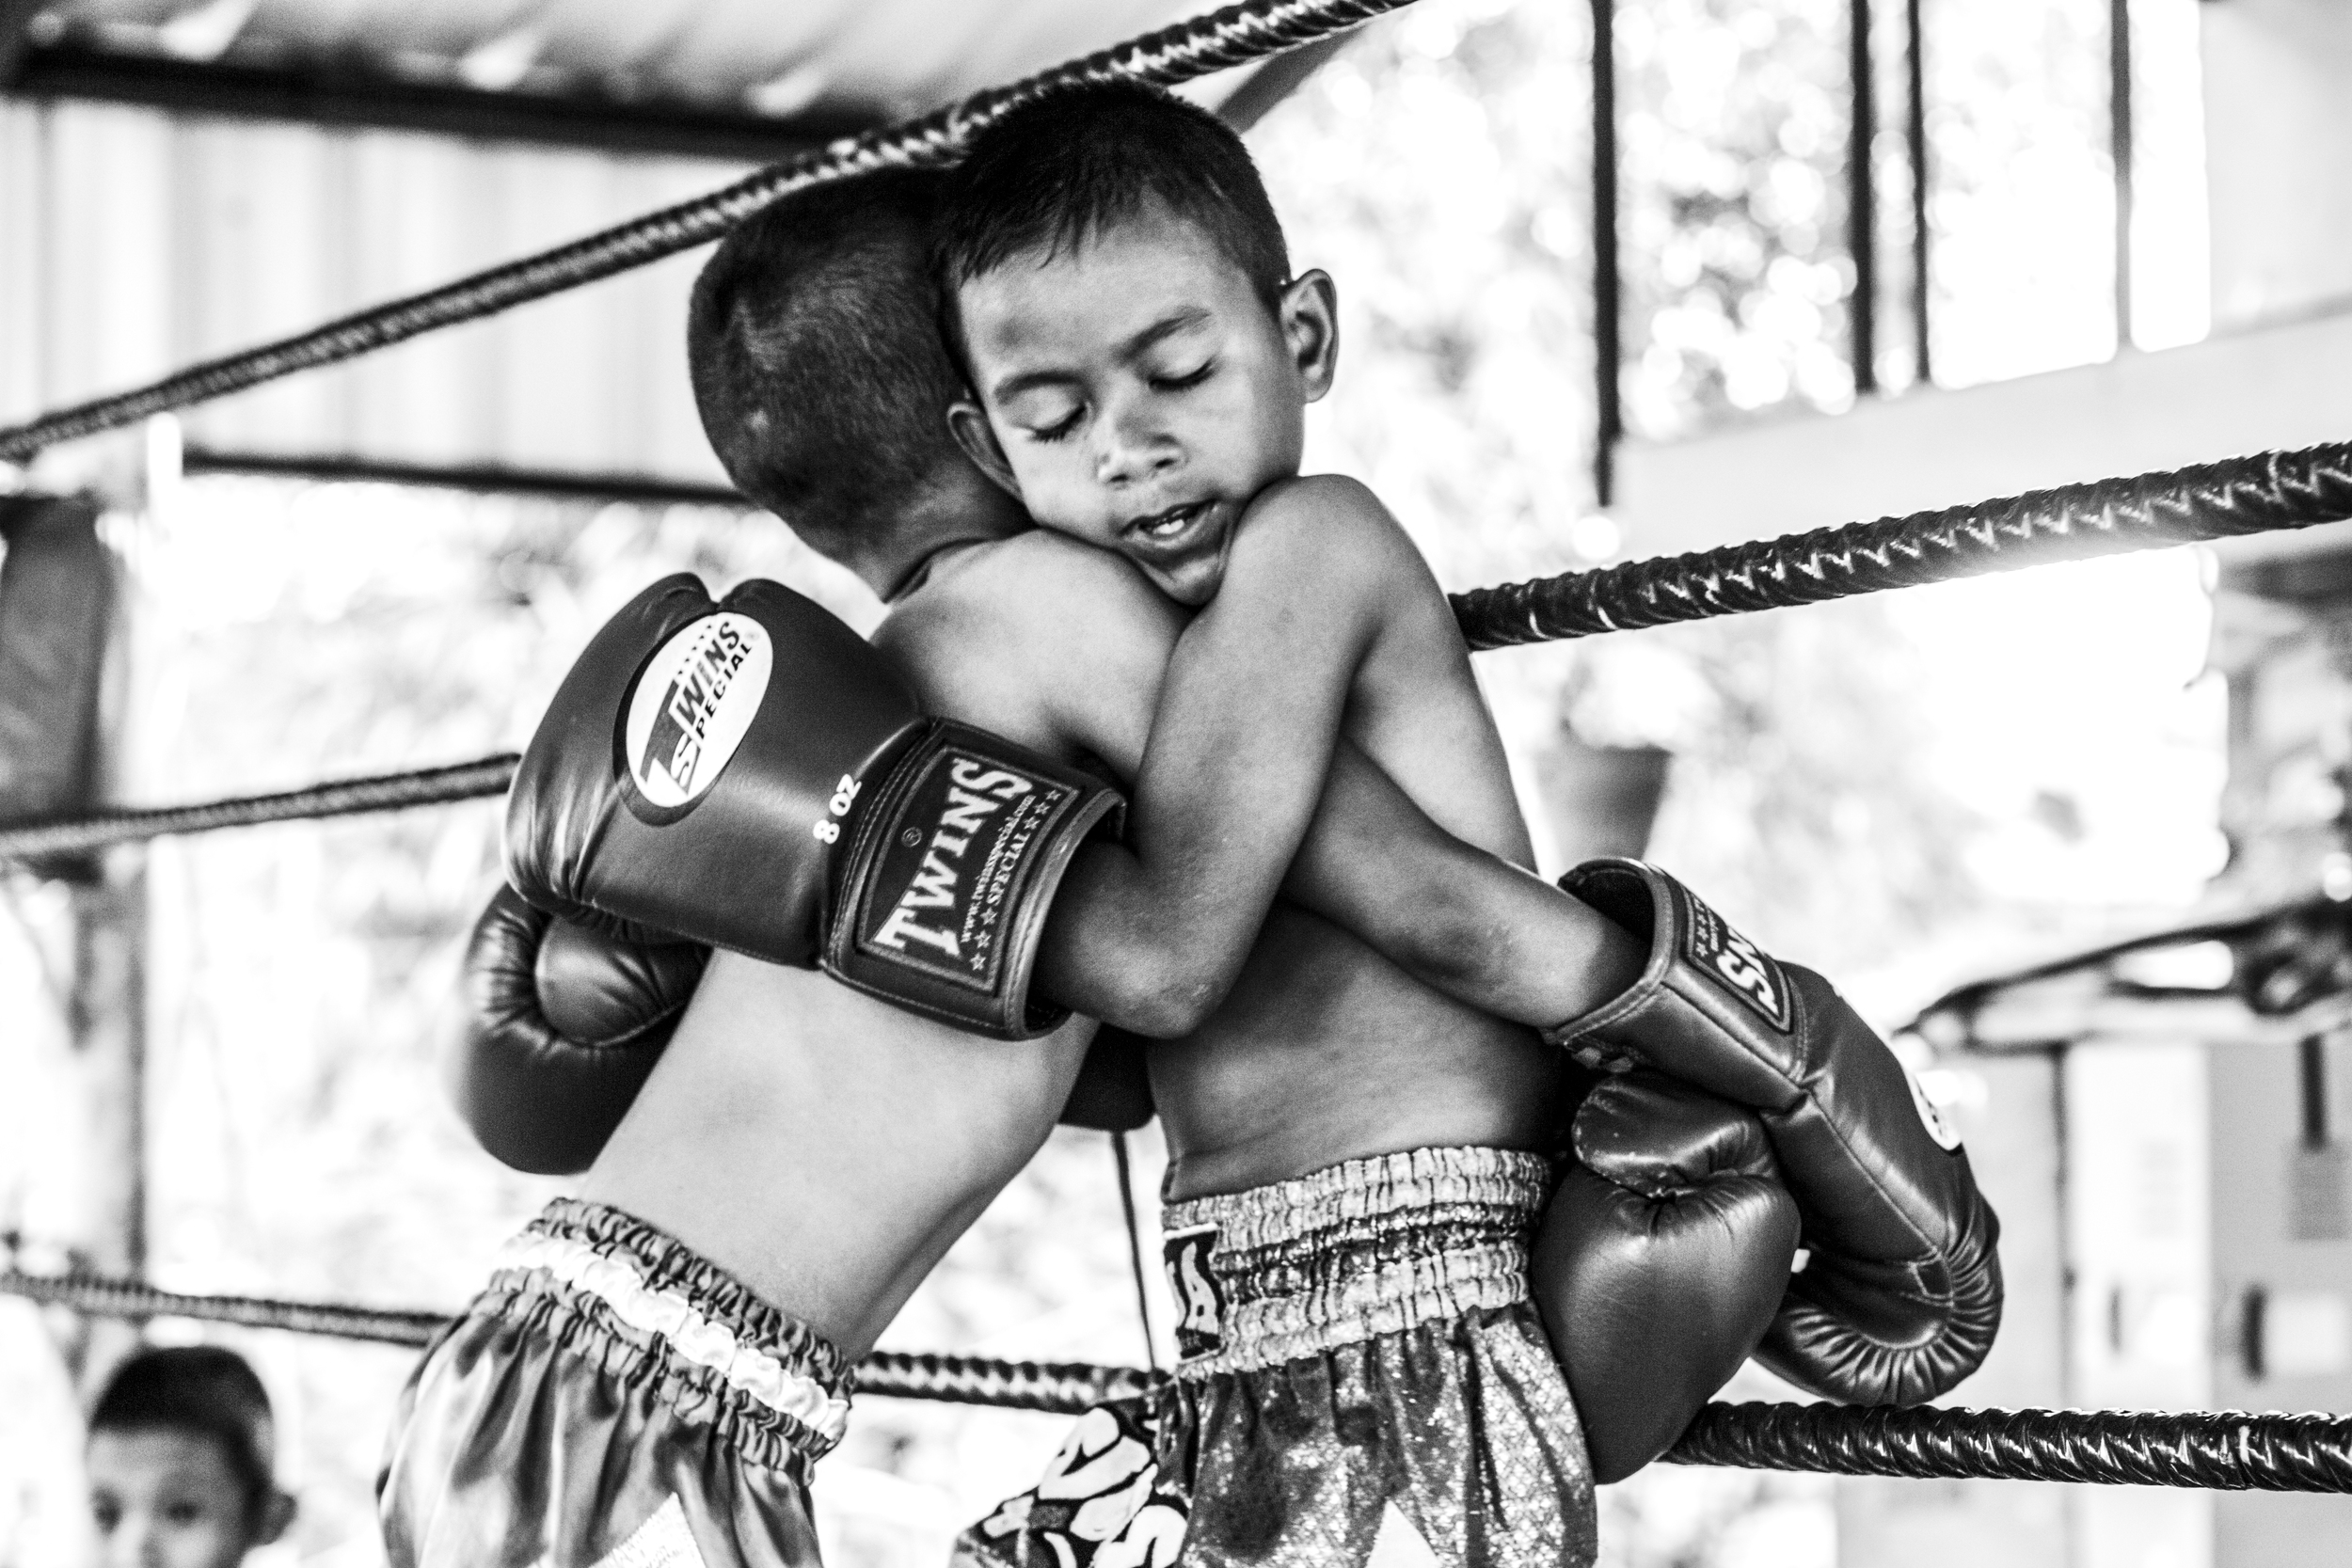 Mid-Fight (July 11, 2014 - Tha Sala, Thailand)